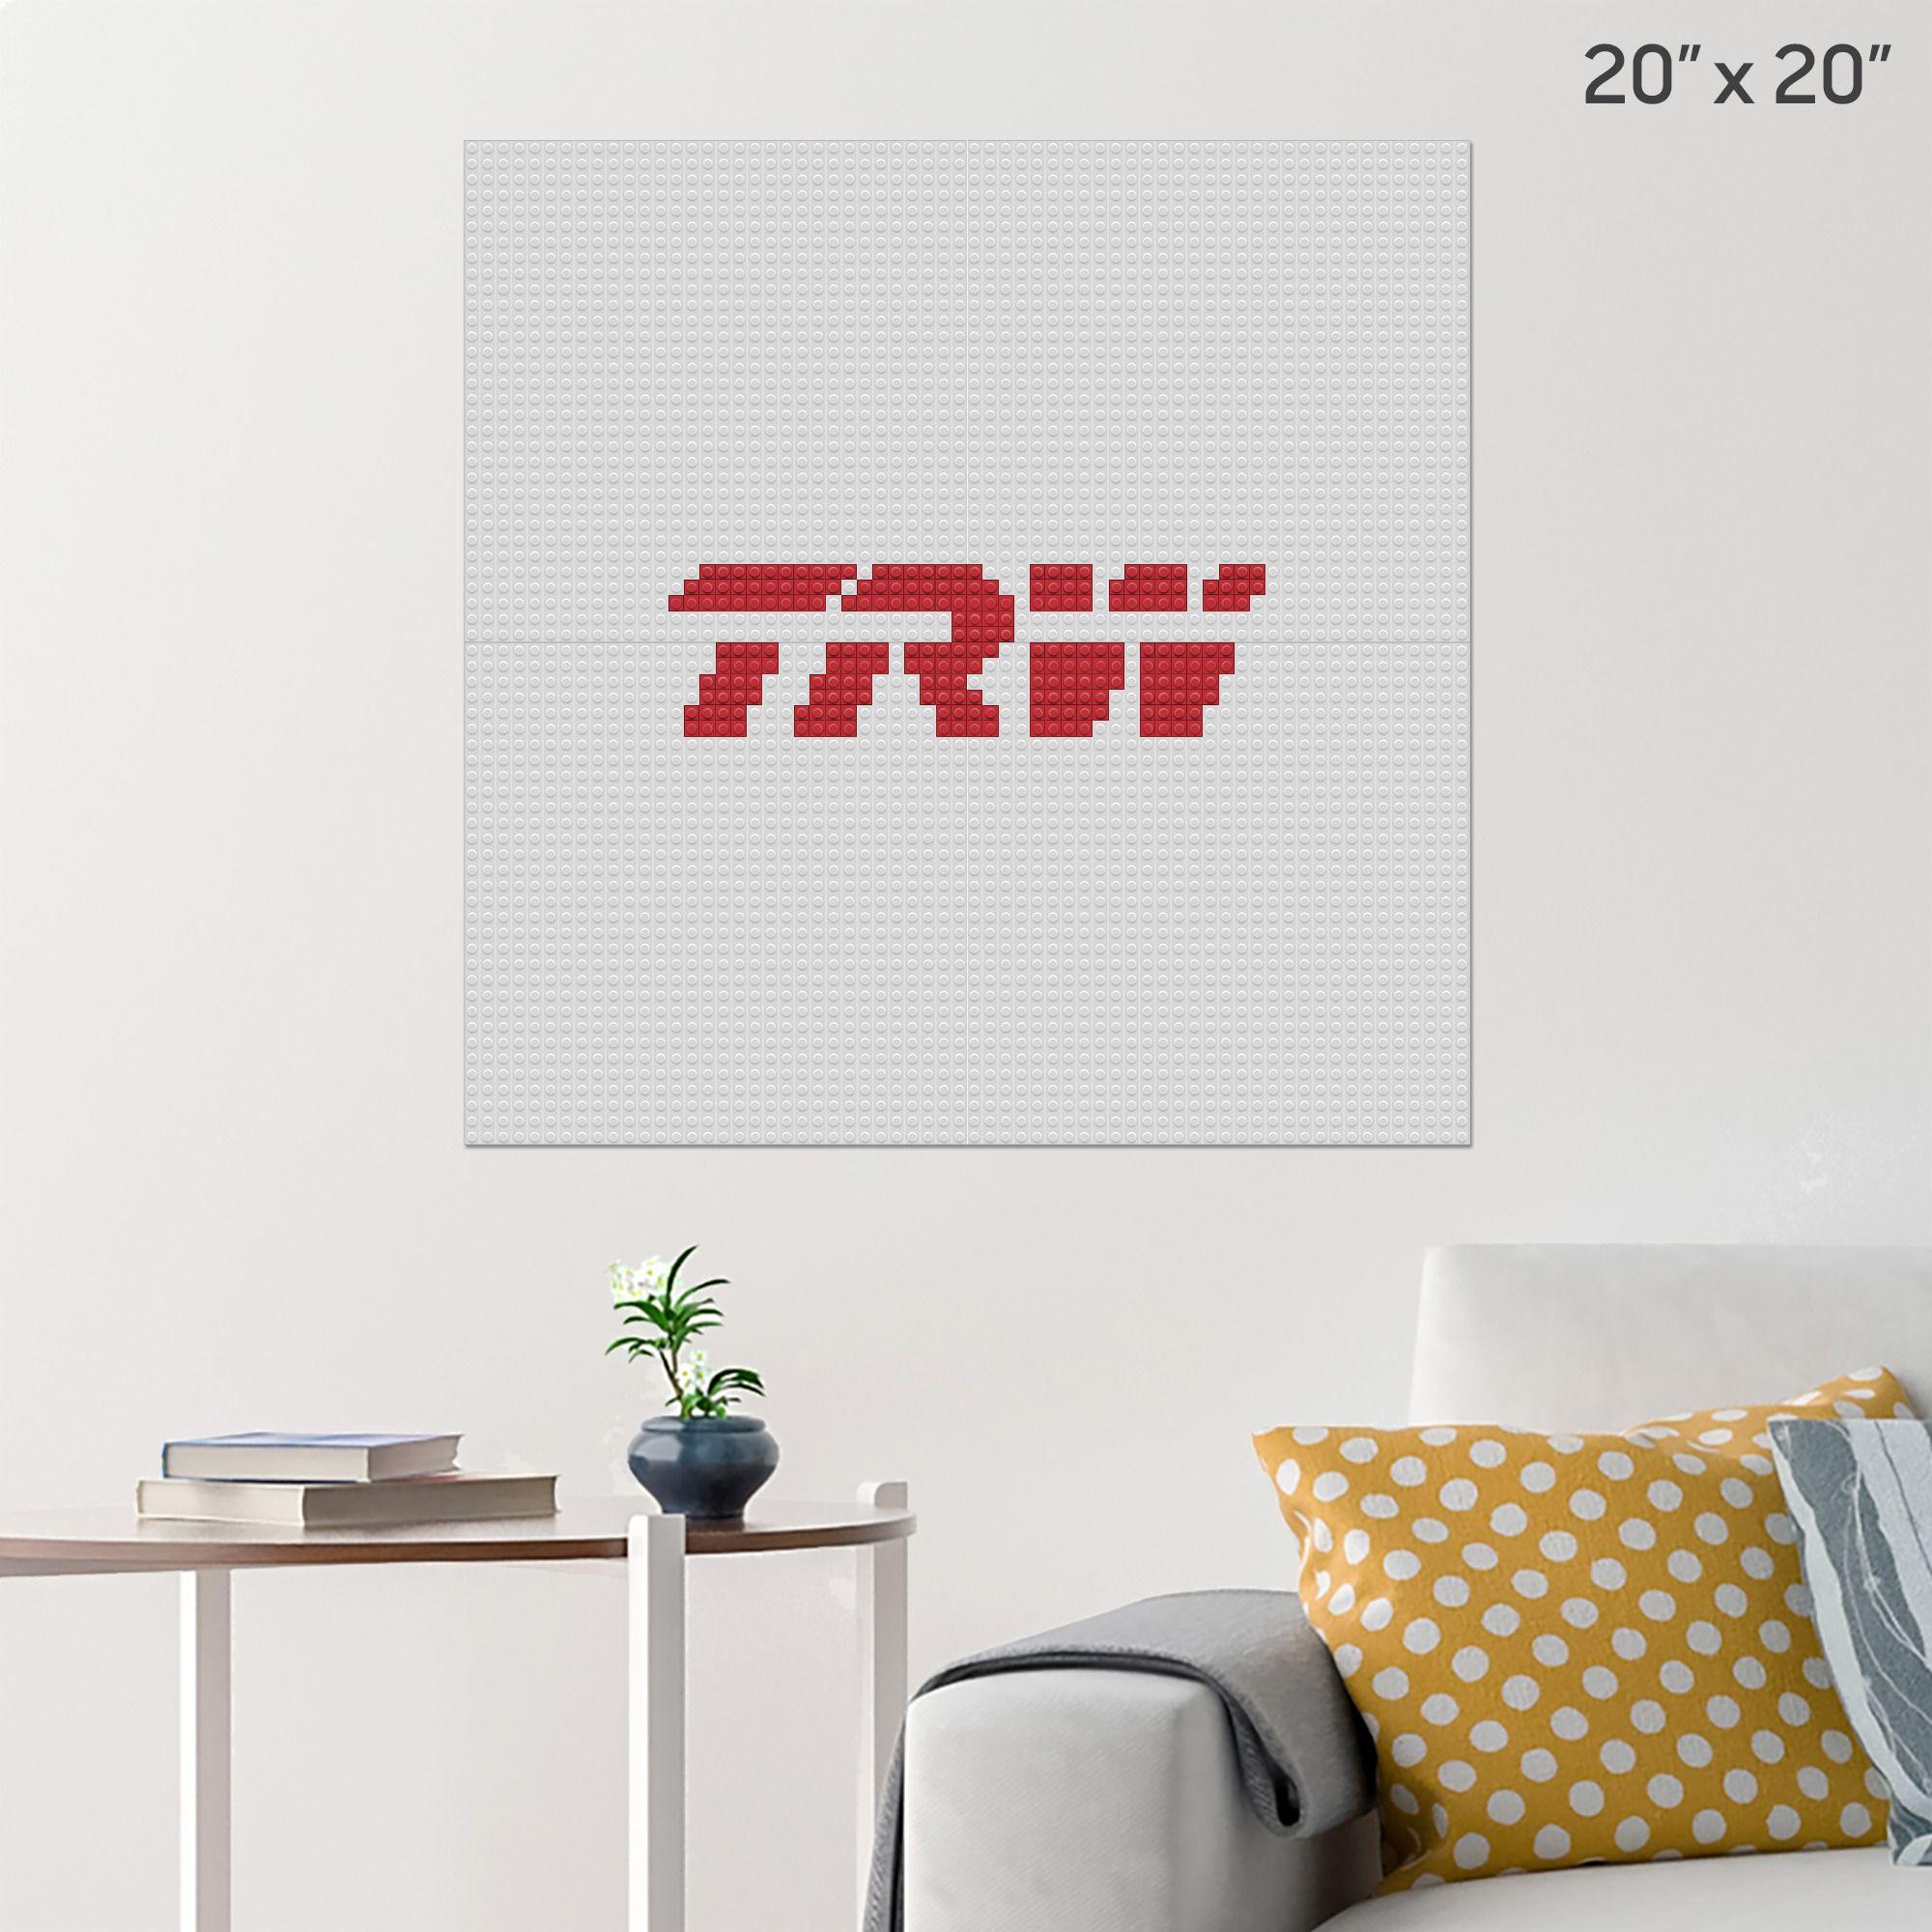 TRW Logo - TRW Automotive Holdings Corp. Logo Wall